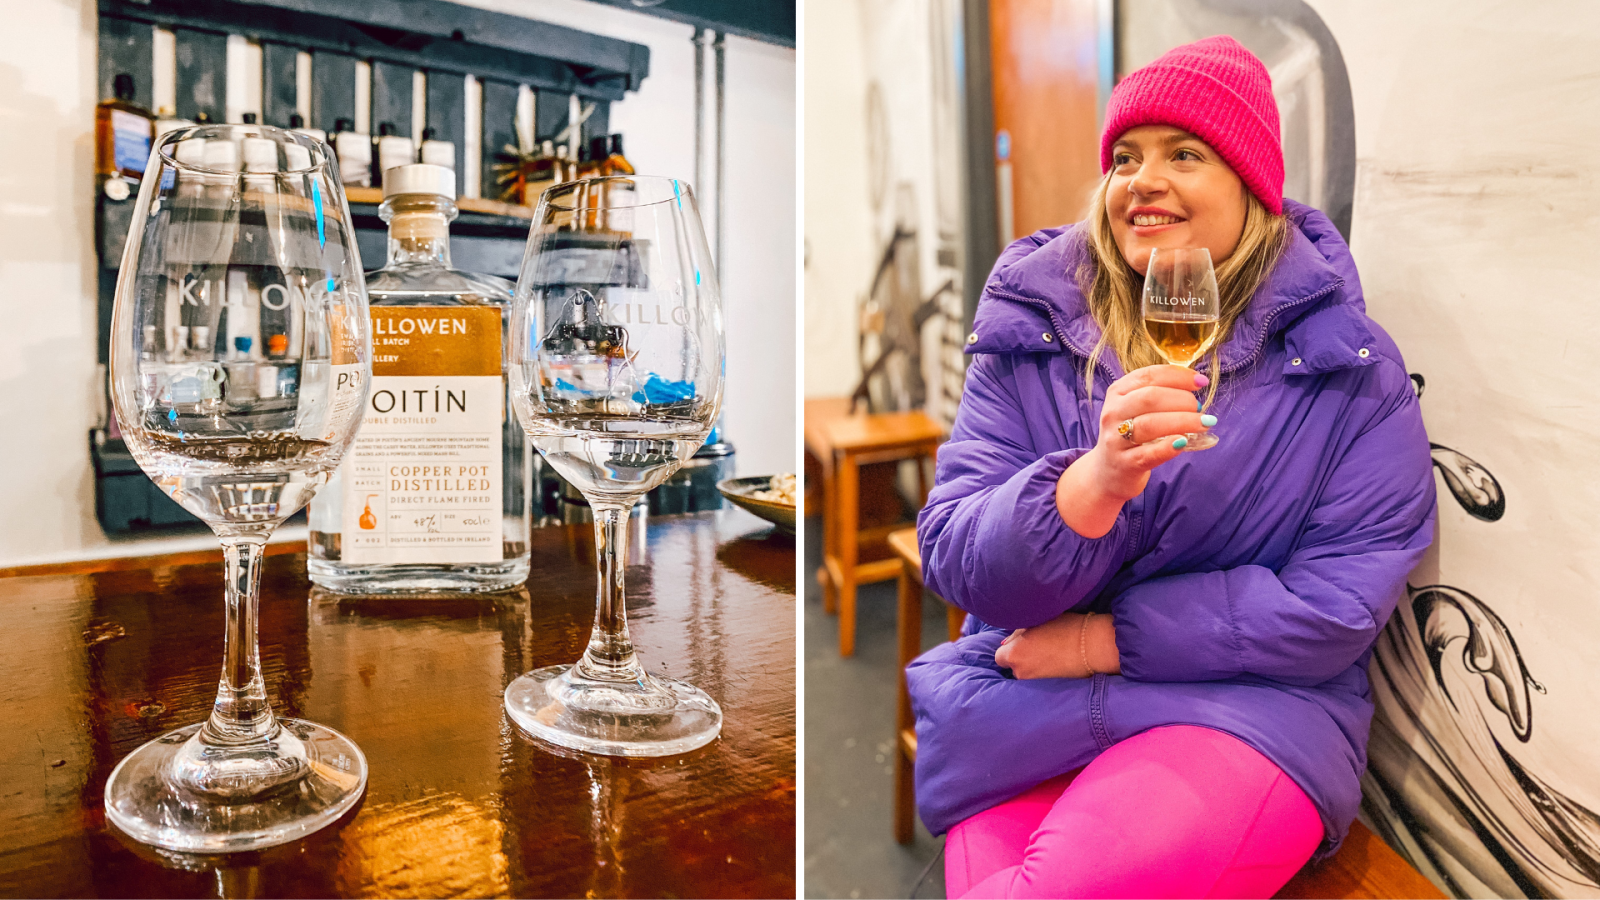 Tara Povey enjoying a tasting tour at Killowen Distillery